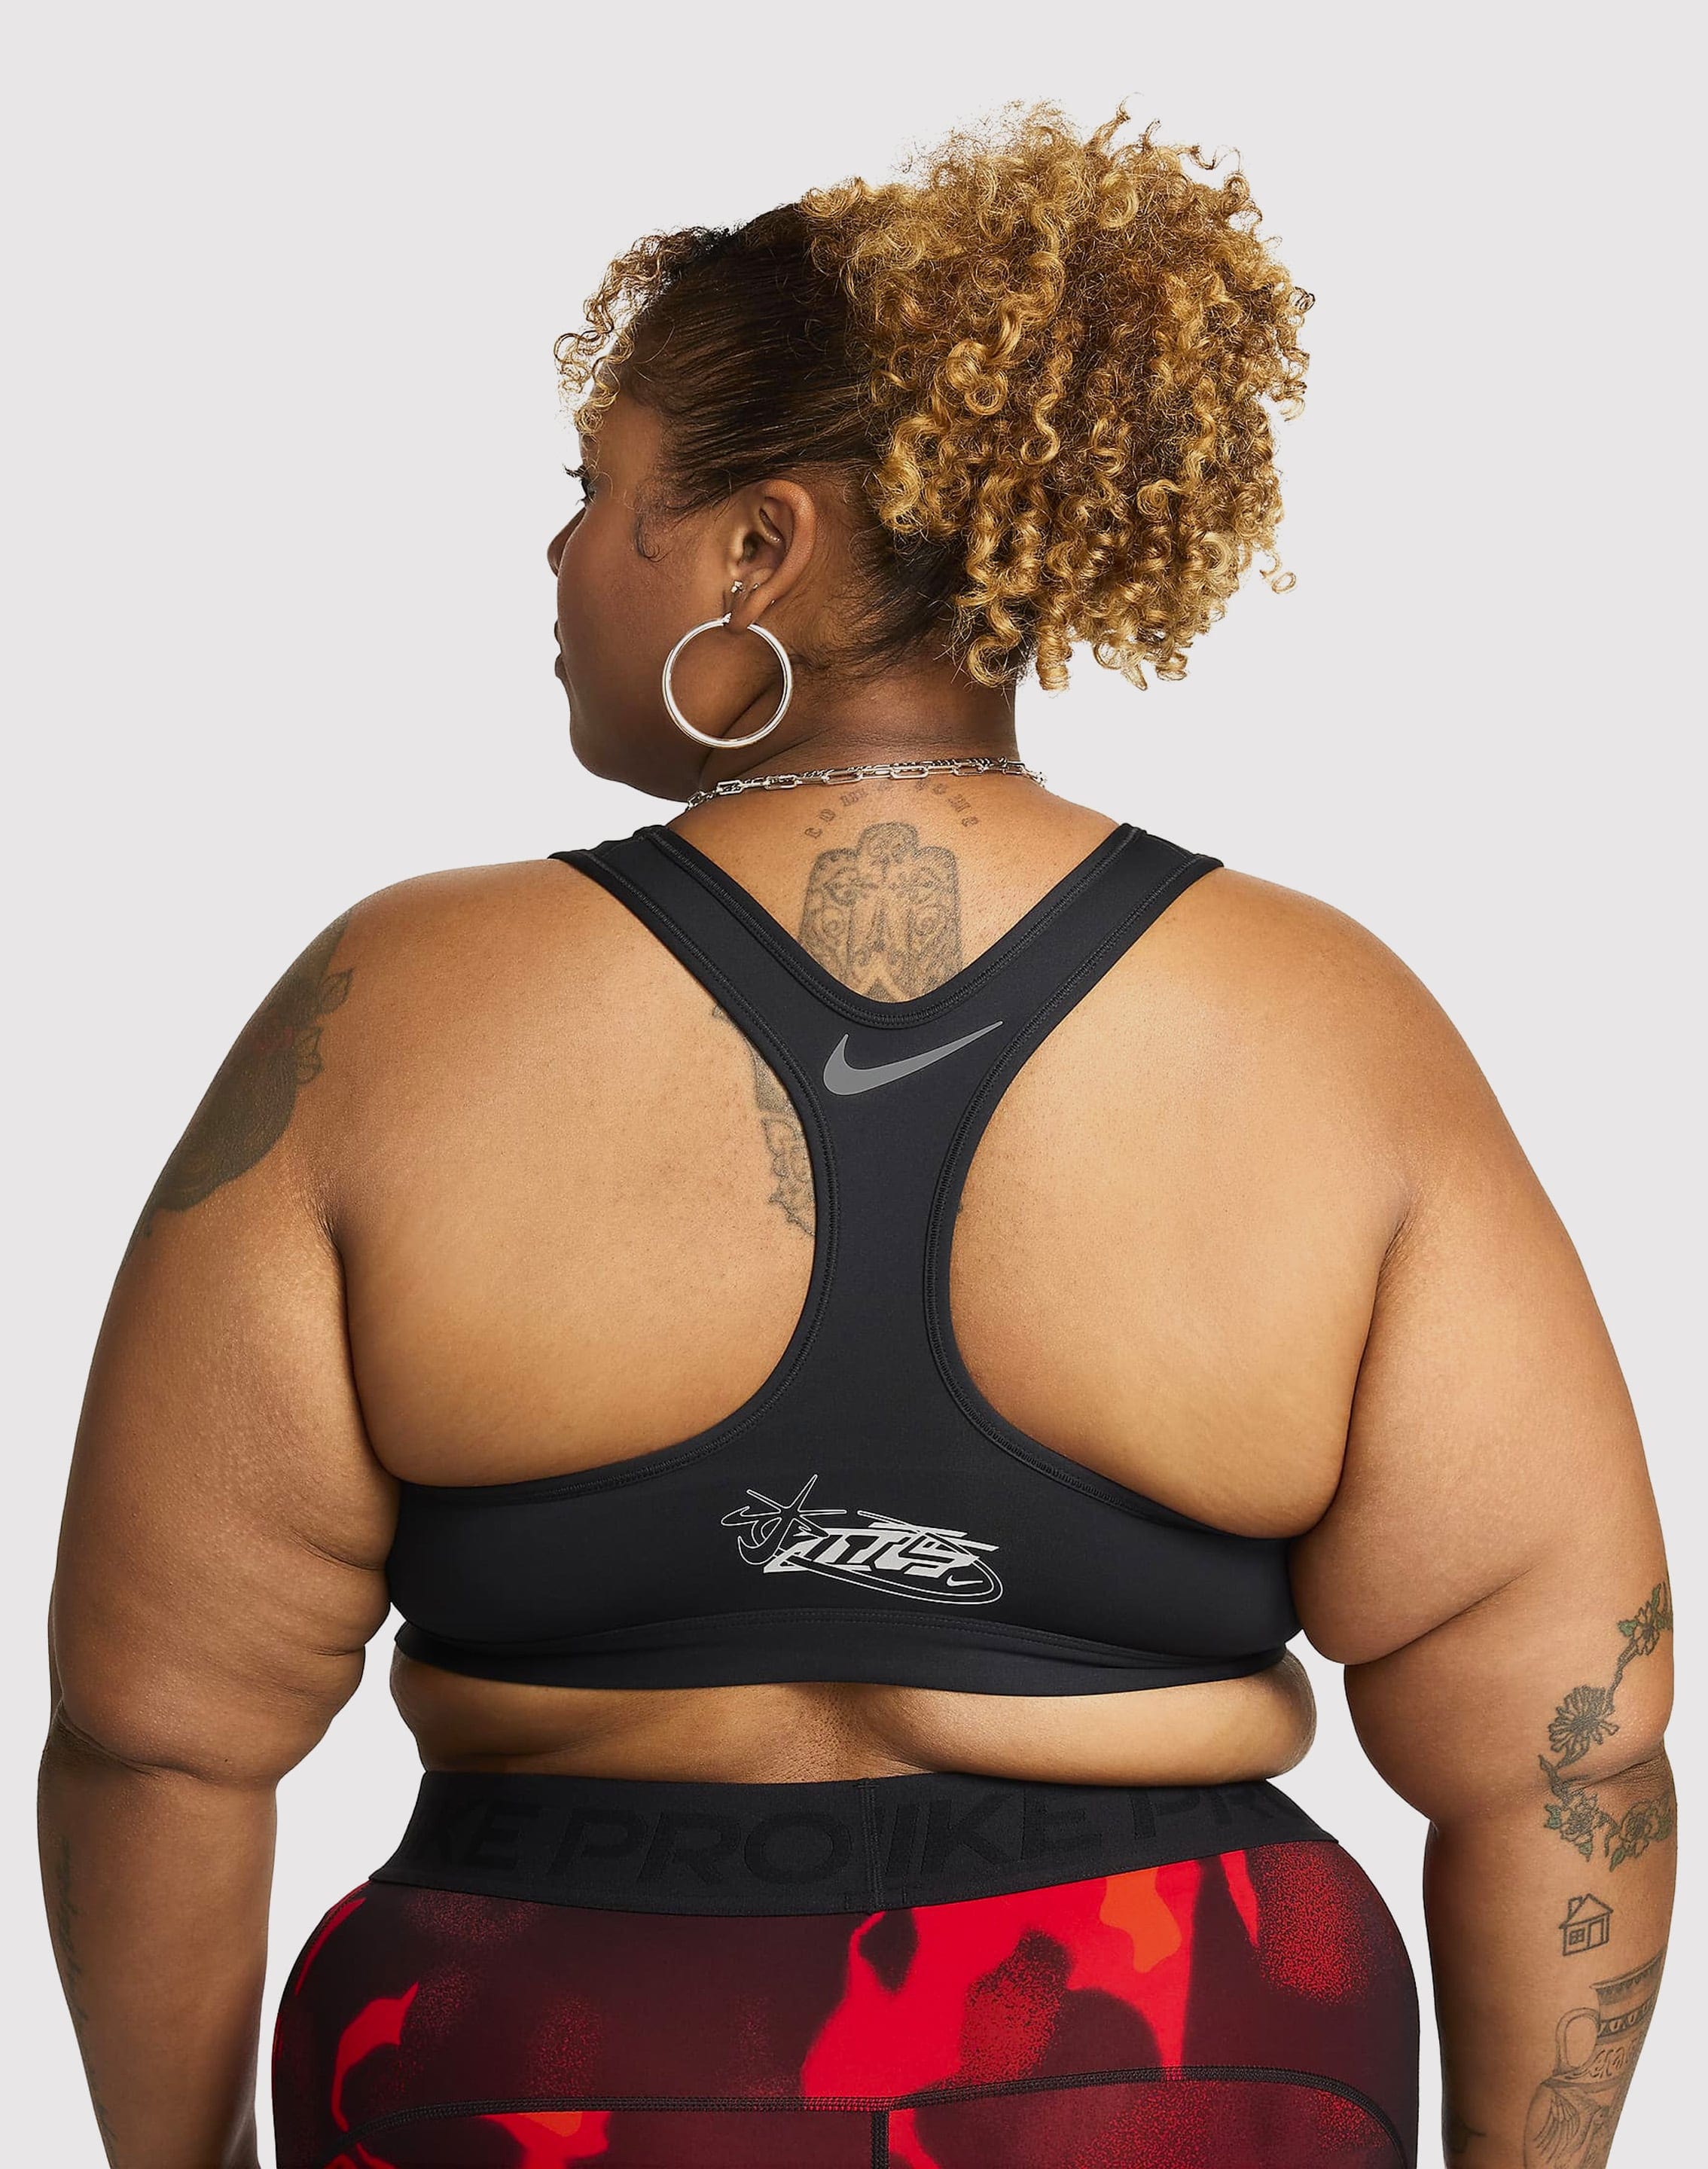 Shop Nike Sports Bra Women Plus Size Xxl with great discounts and